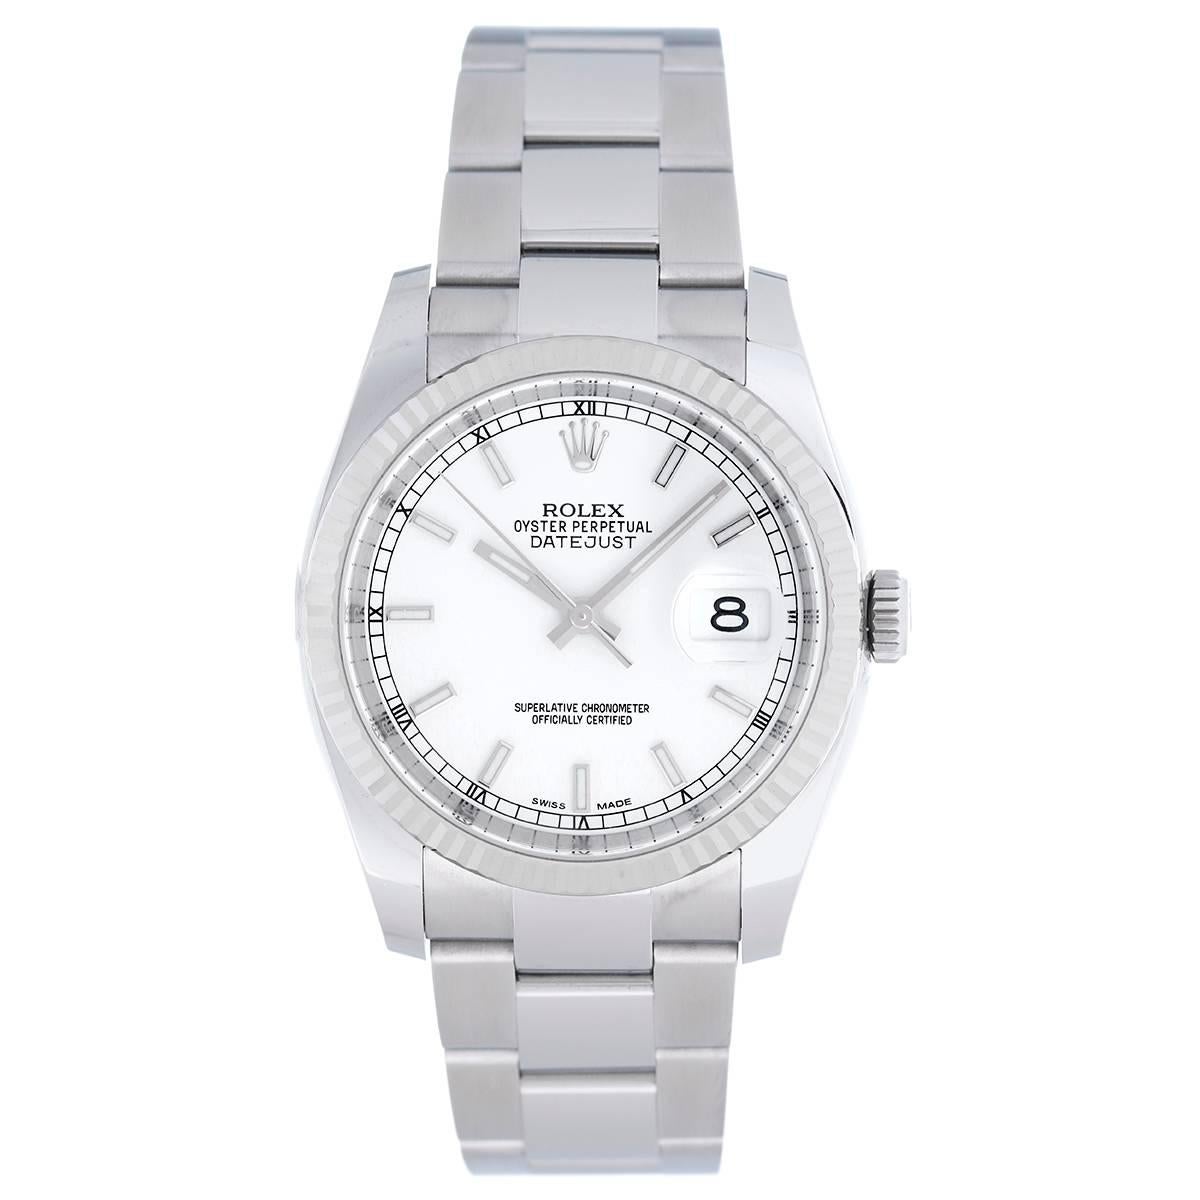 Rolex Stainless Steel Datejust Automatic Wristwatch Ref 116234